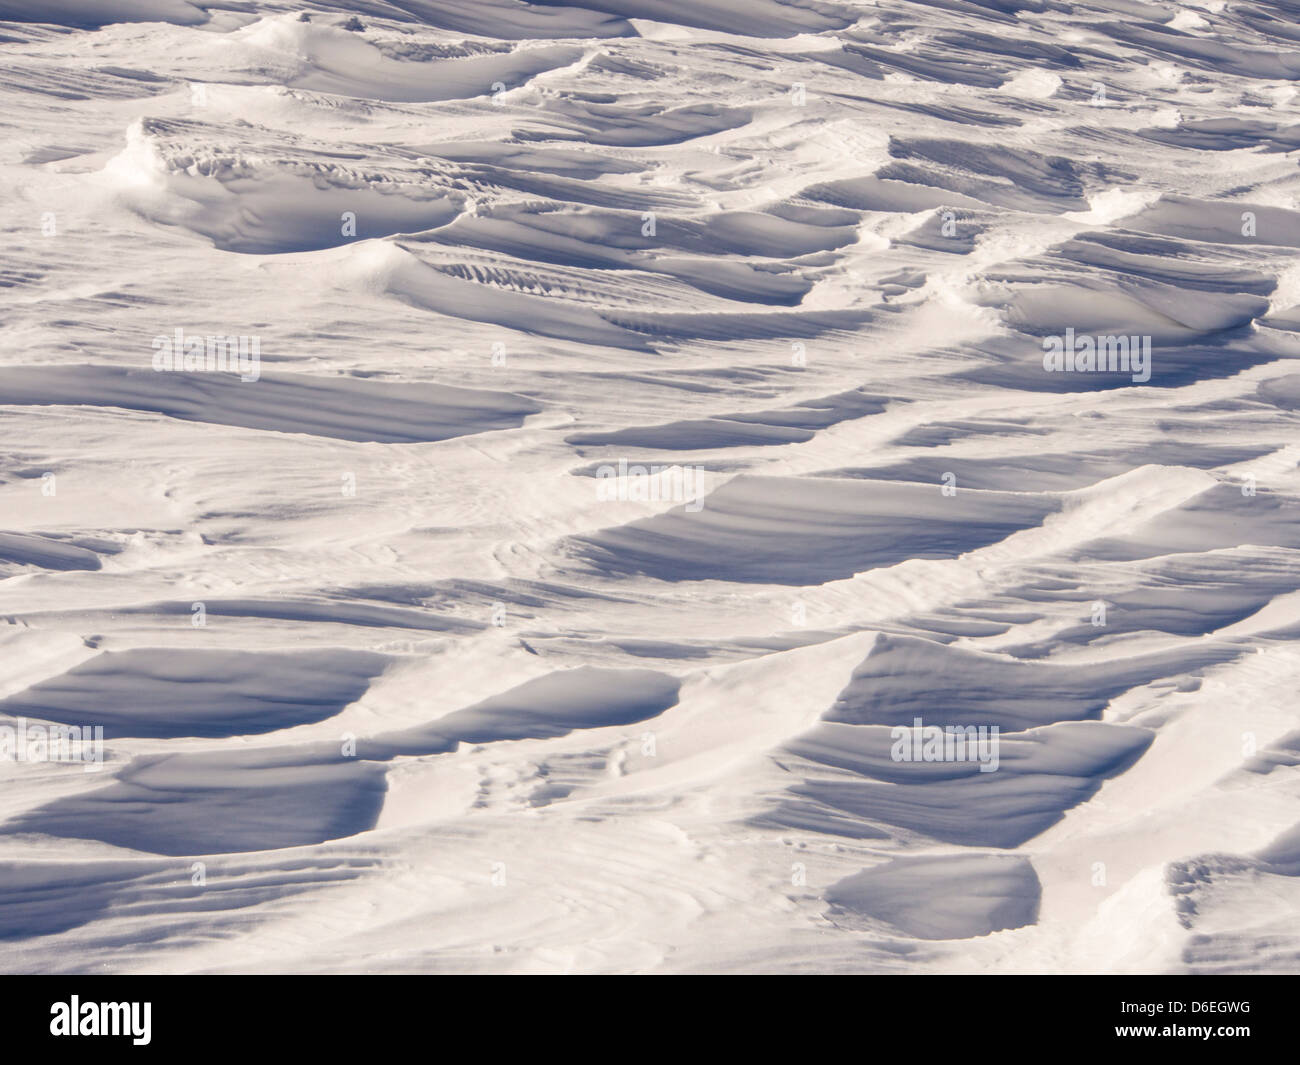 Sastrugi caused by wind scour on snow, Lake District, UK. Stock Photo